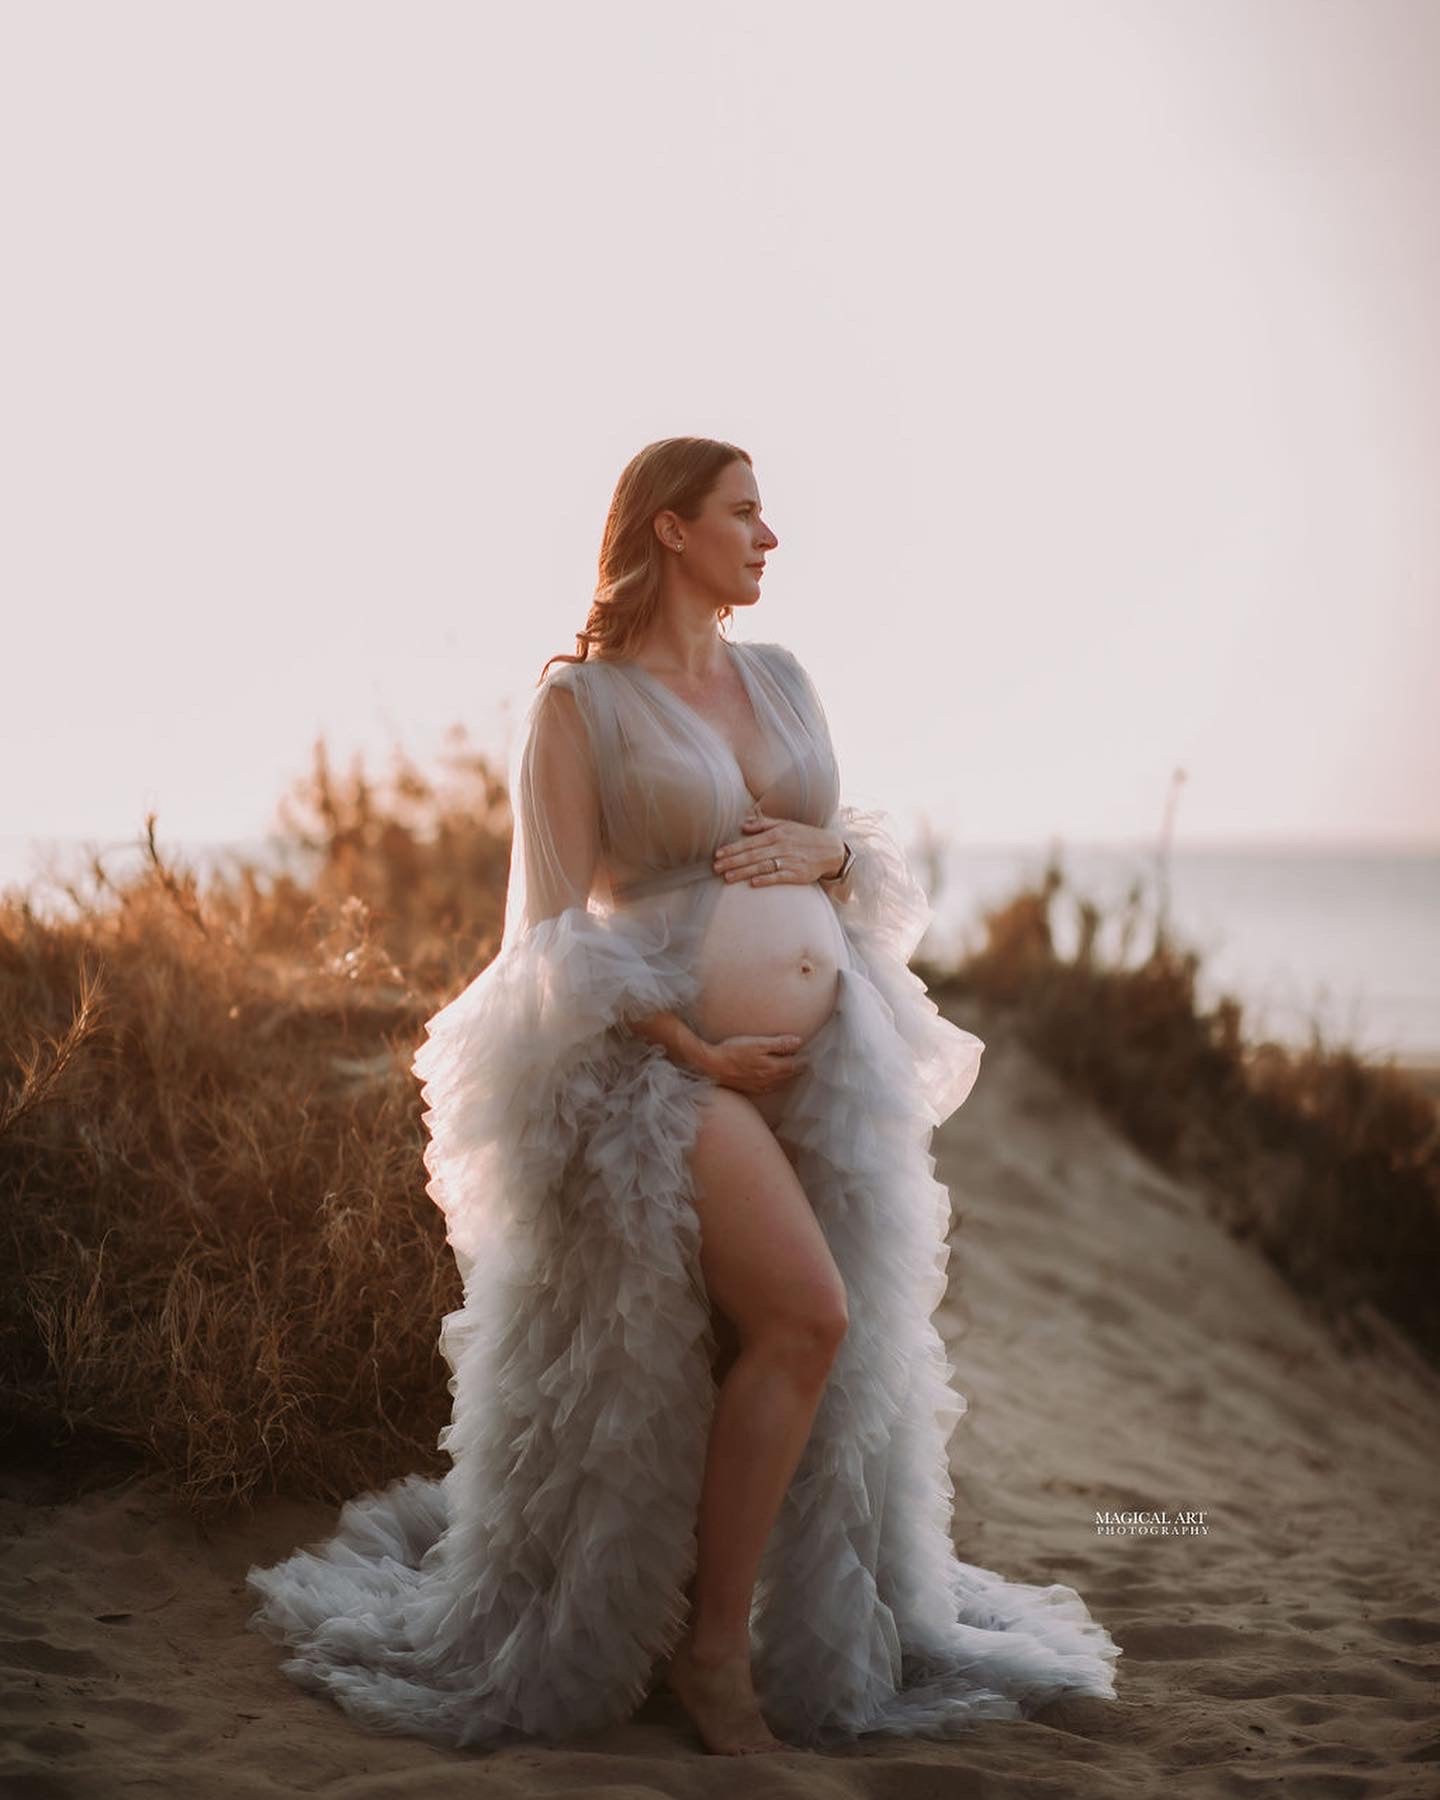 Maternity Photoshoot Dresses - Gray Tulle Robe - Sophie